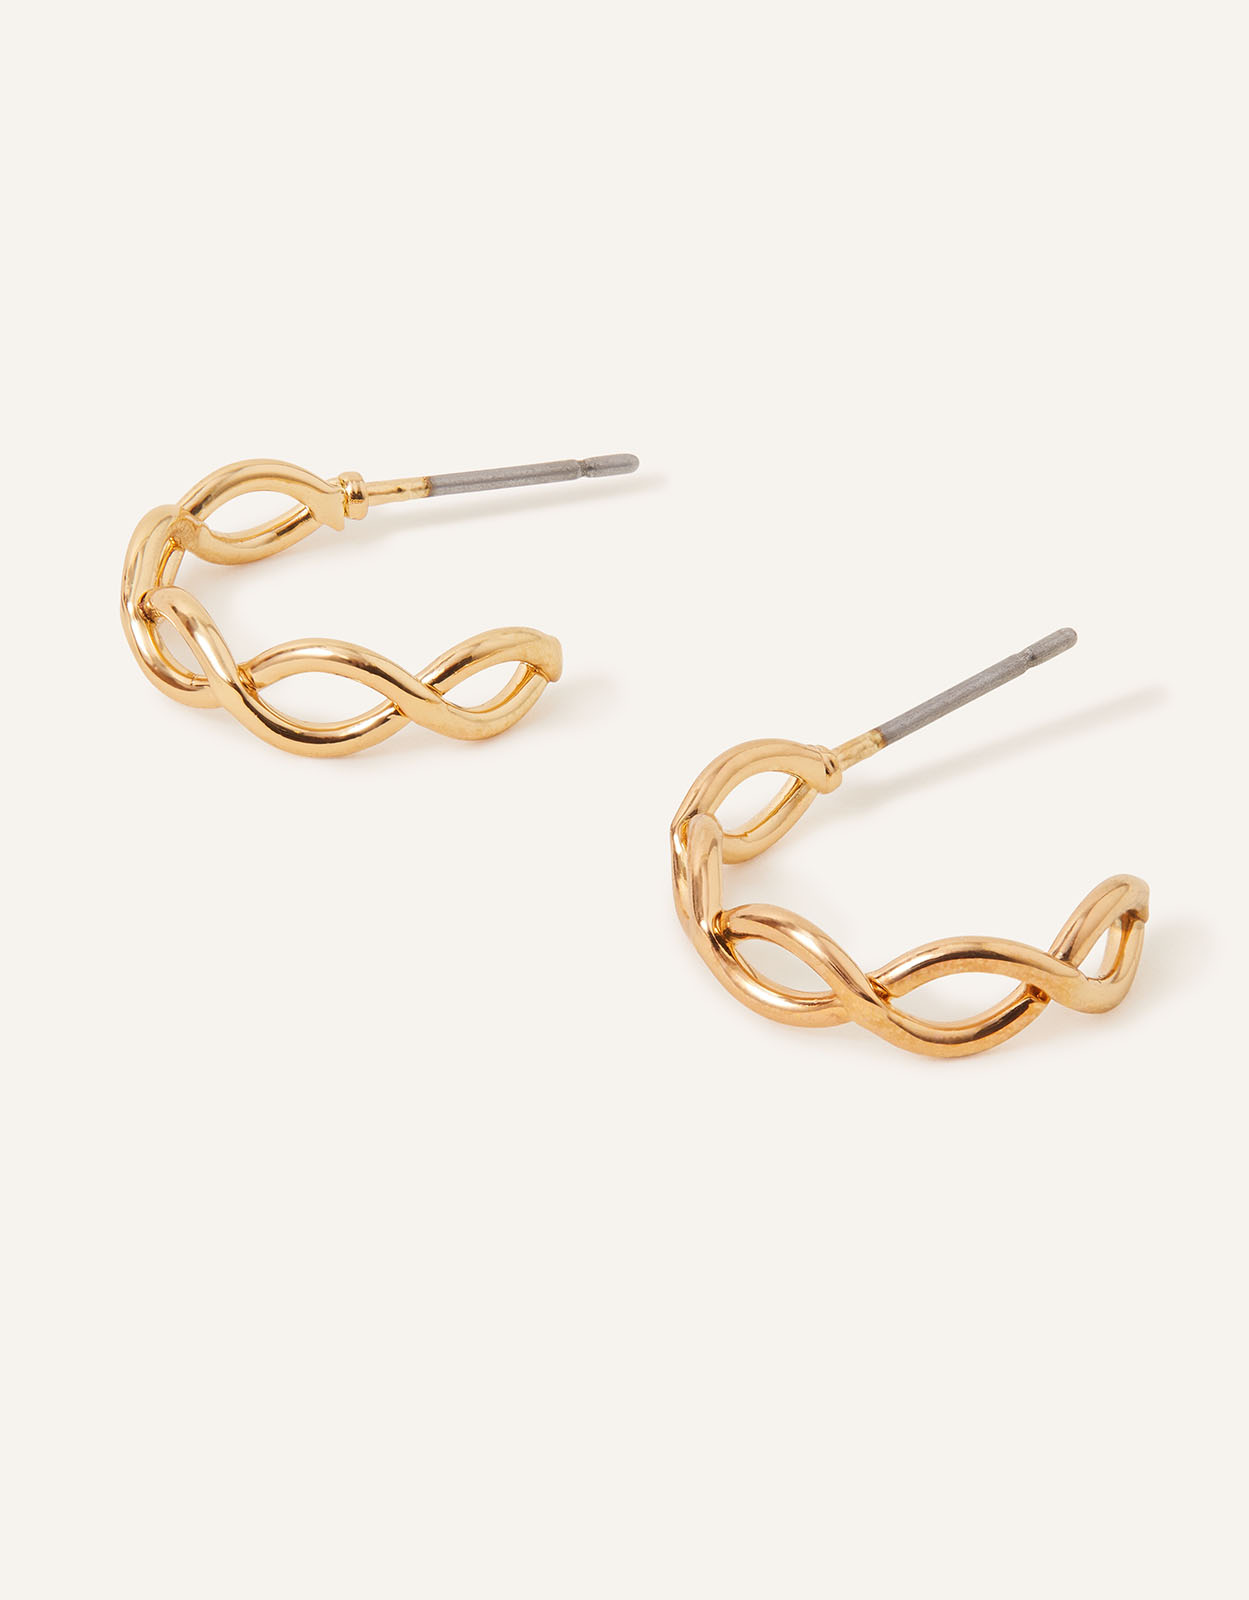 Accessorize Women's Gold Crossover Hoop Earrings, Size: One Size